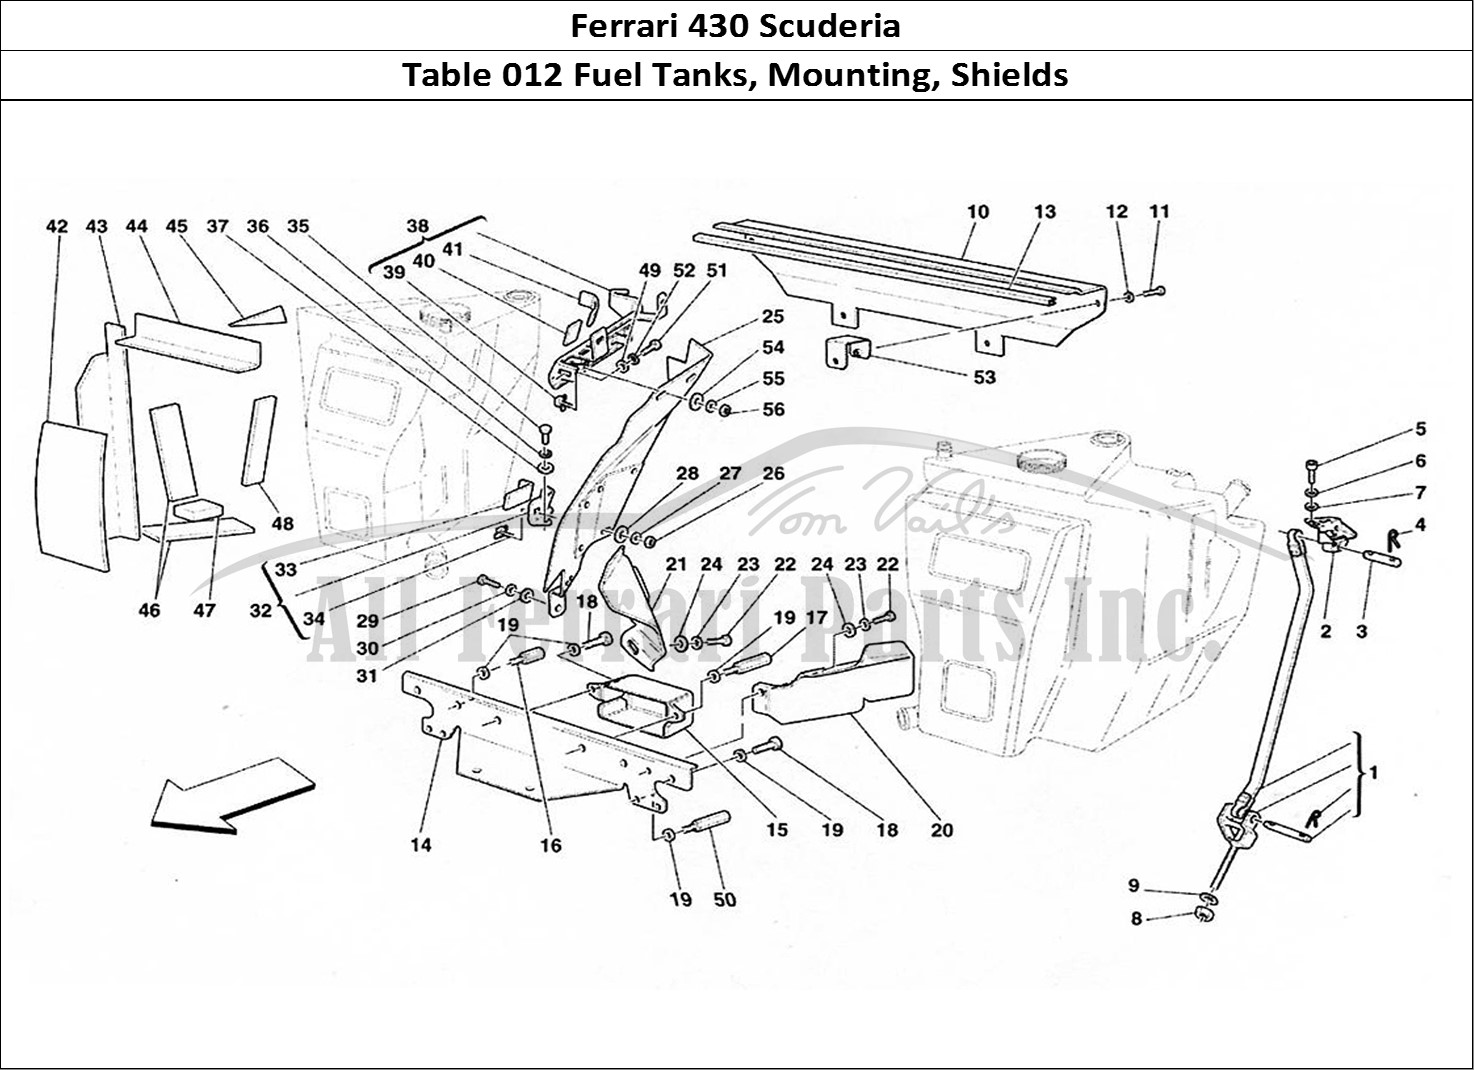 Ferrari Parts Ferrari 430 Scuderia Page 012 Fuel Tanks - Fixing and P